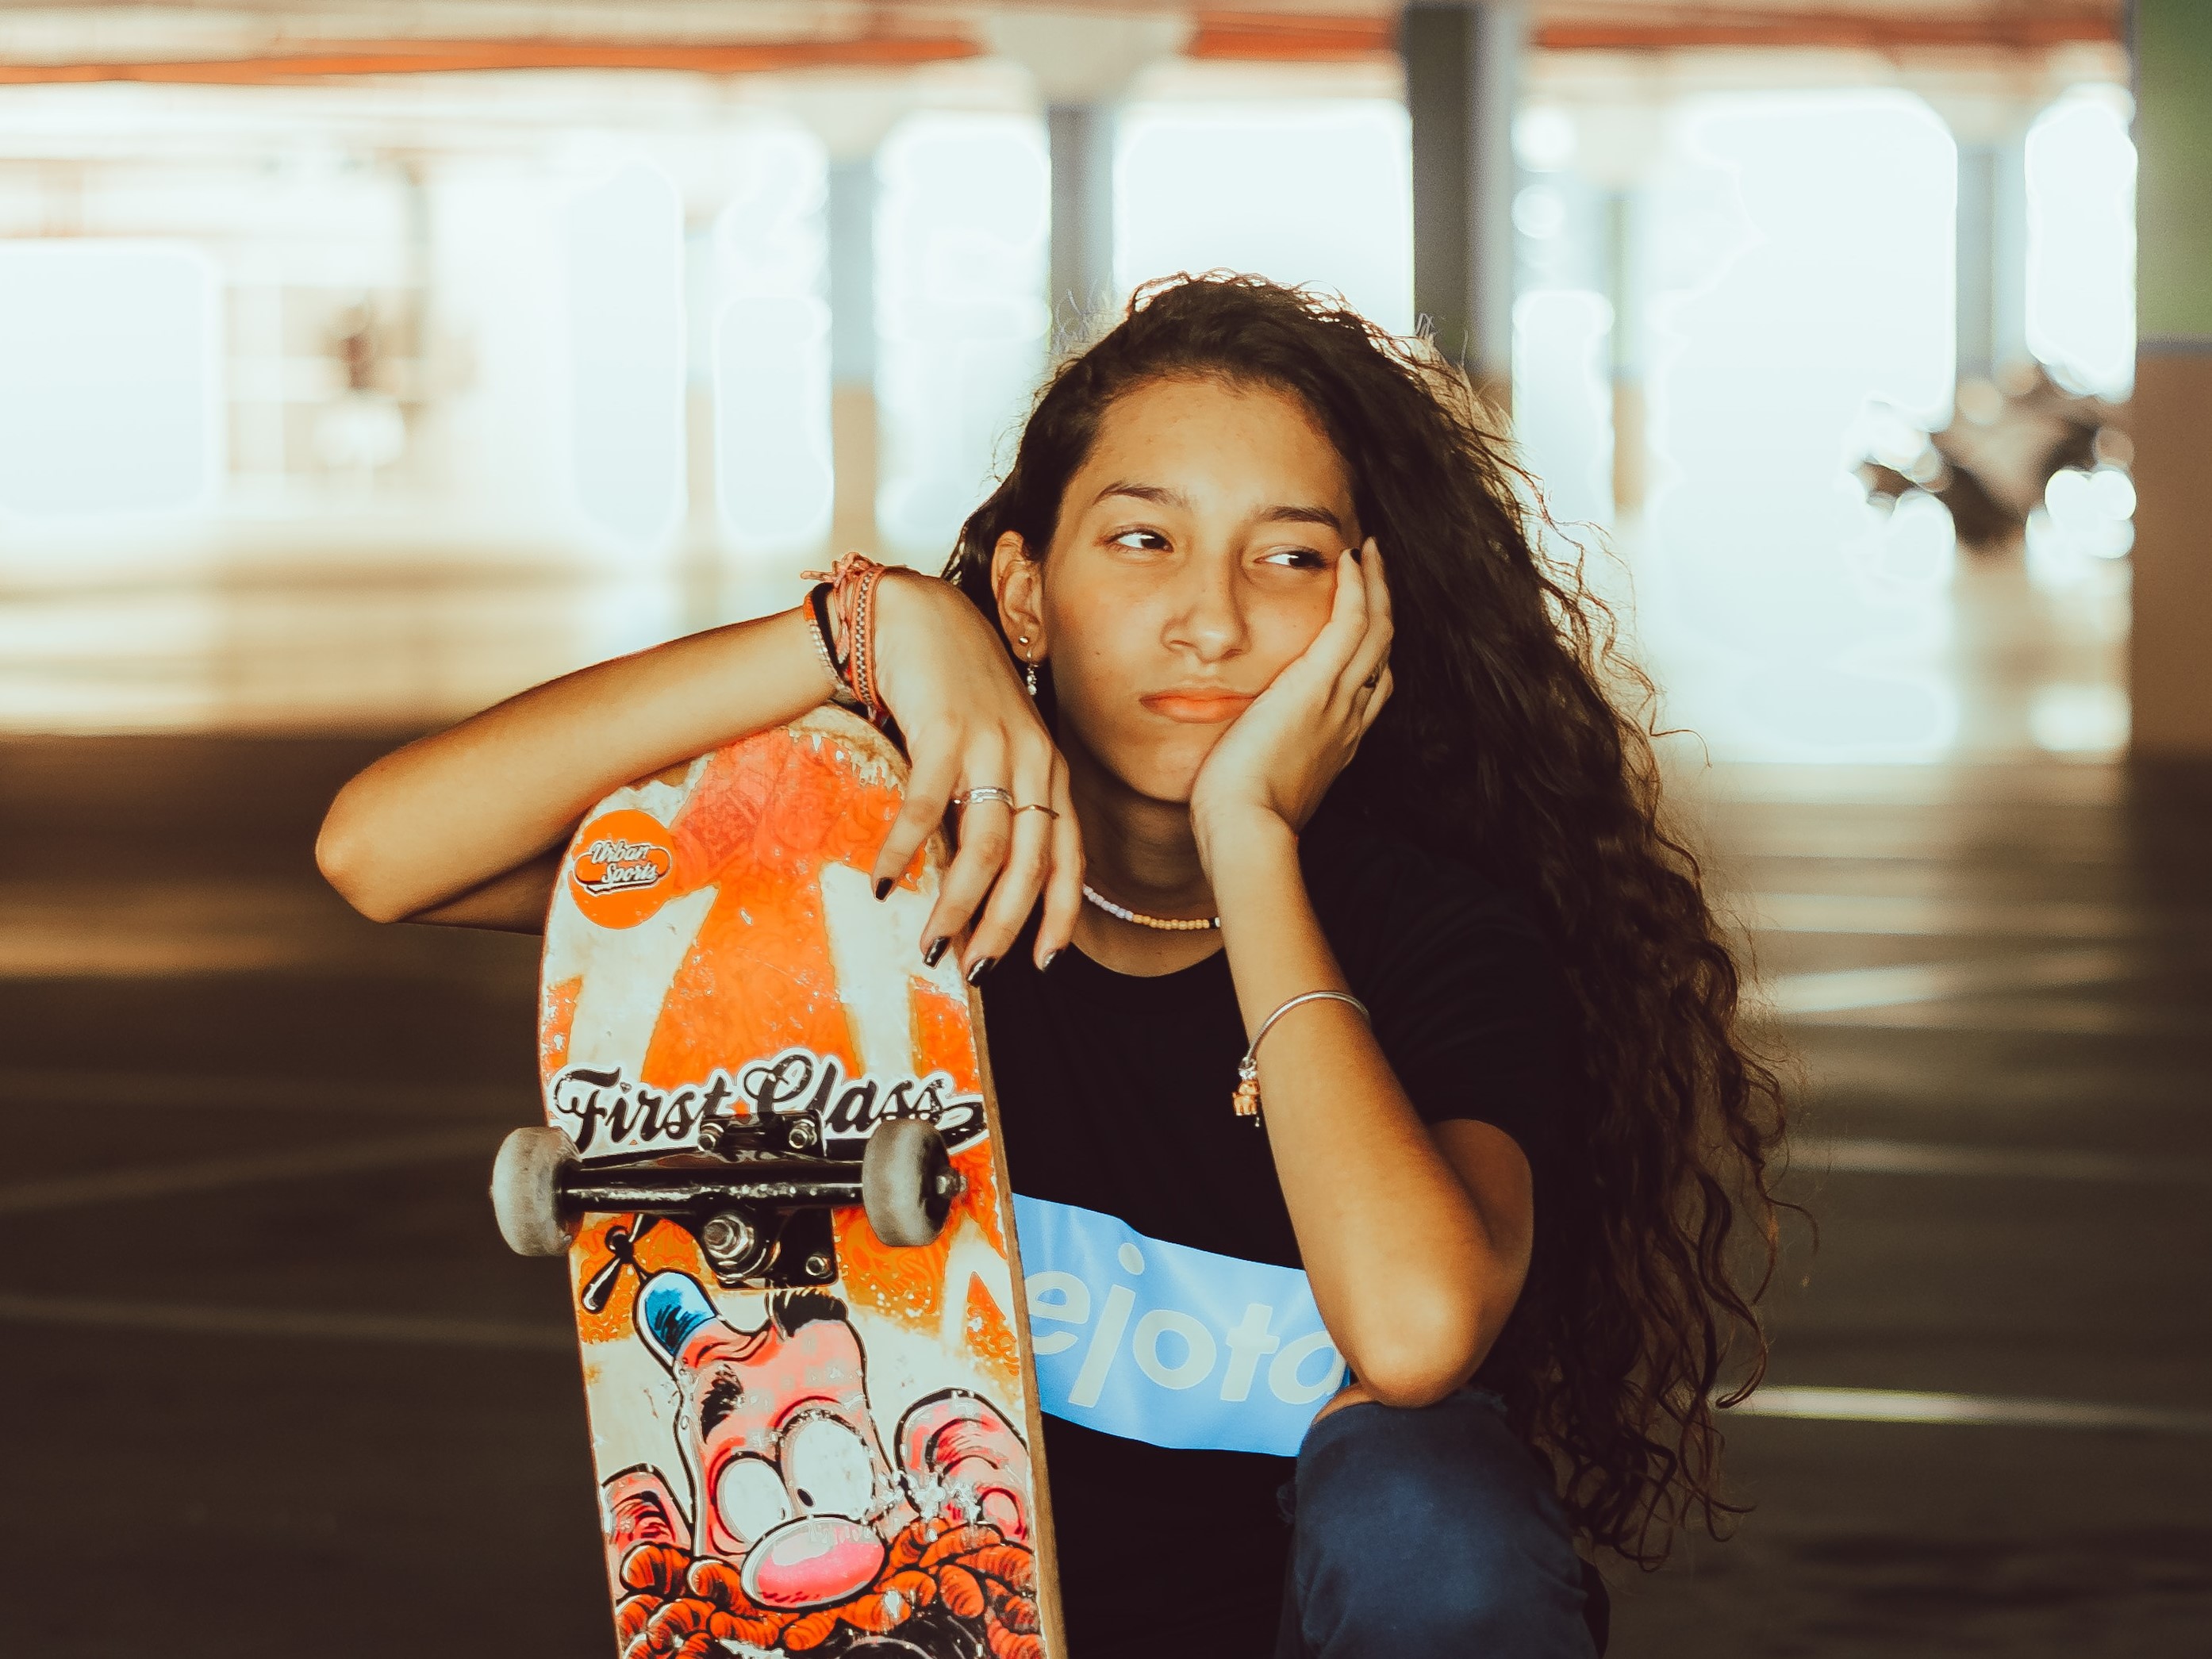 Portret tienermeisje met lang bruin haar en skateboard